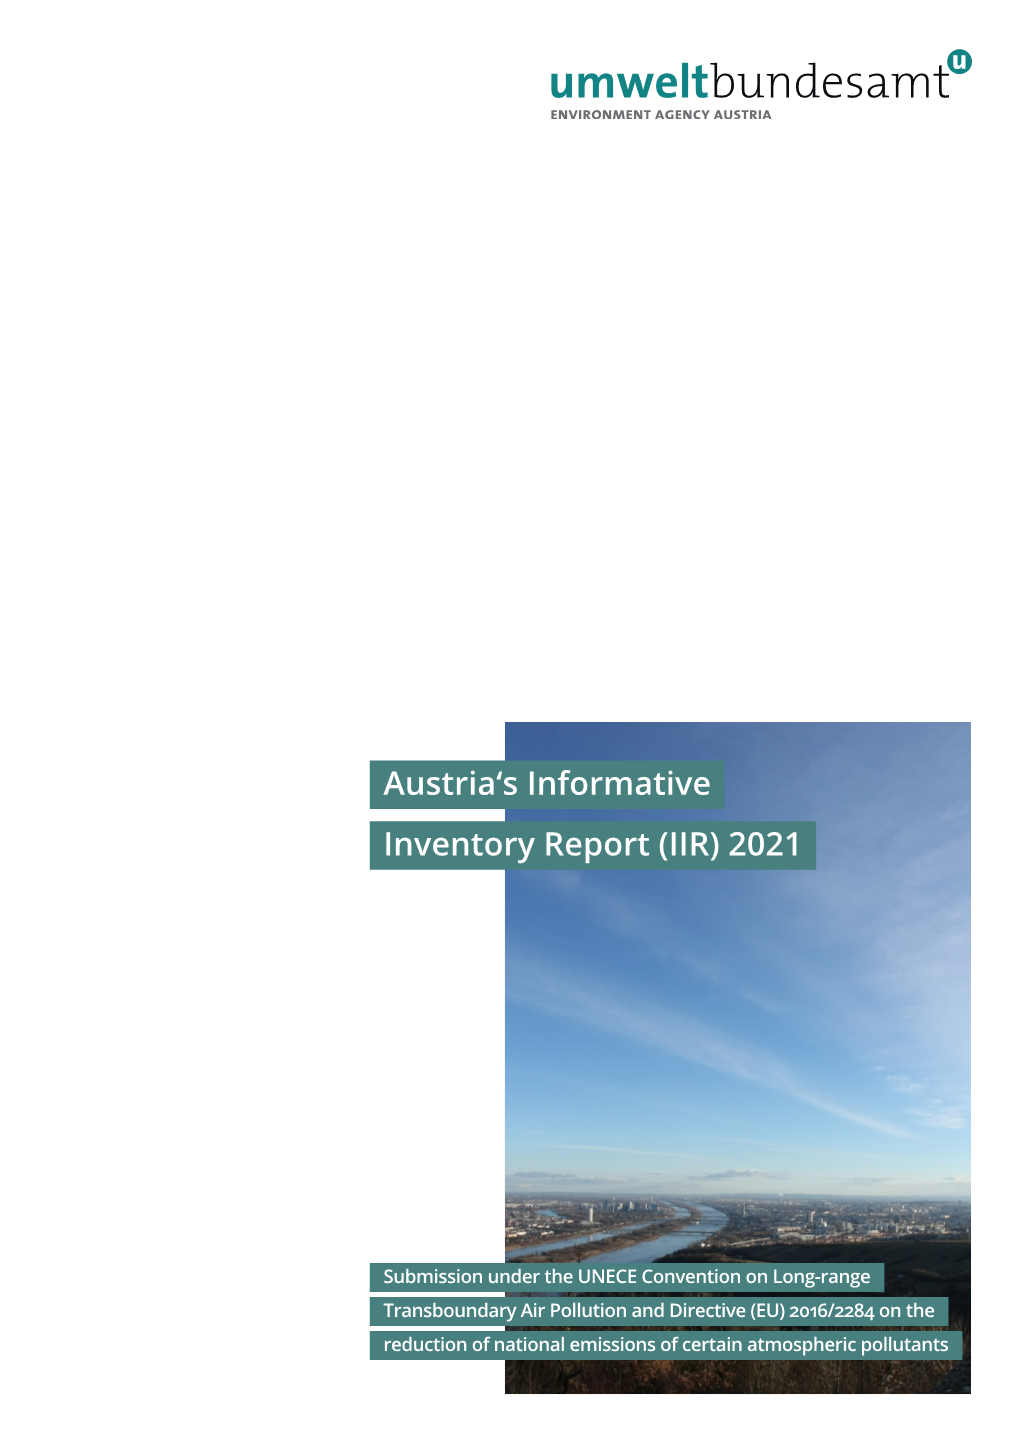 Austria's Informative Inventory Report